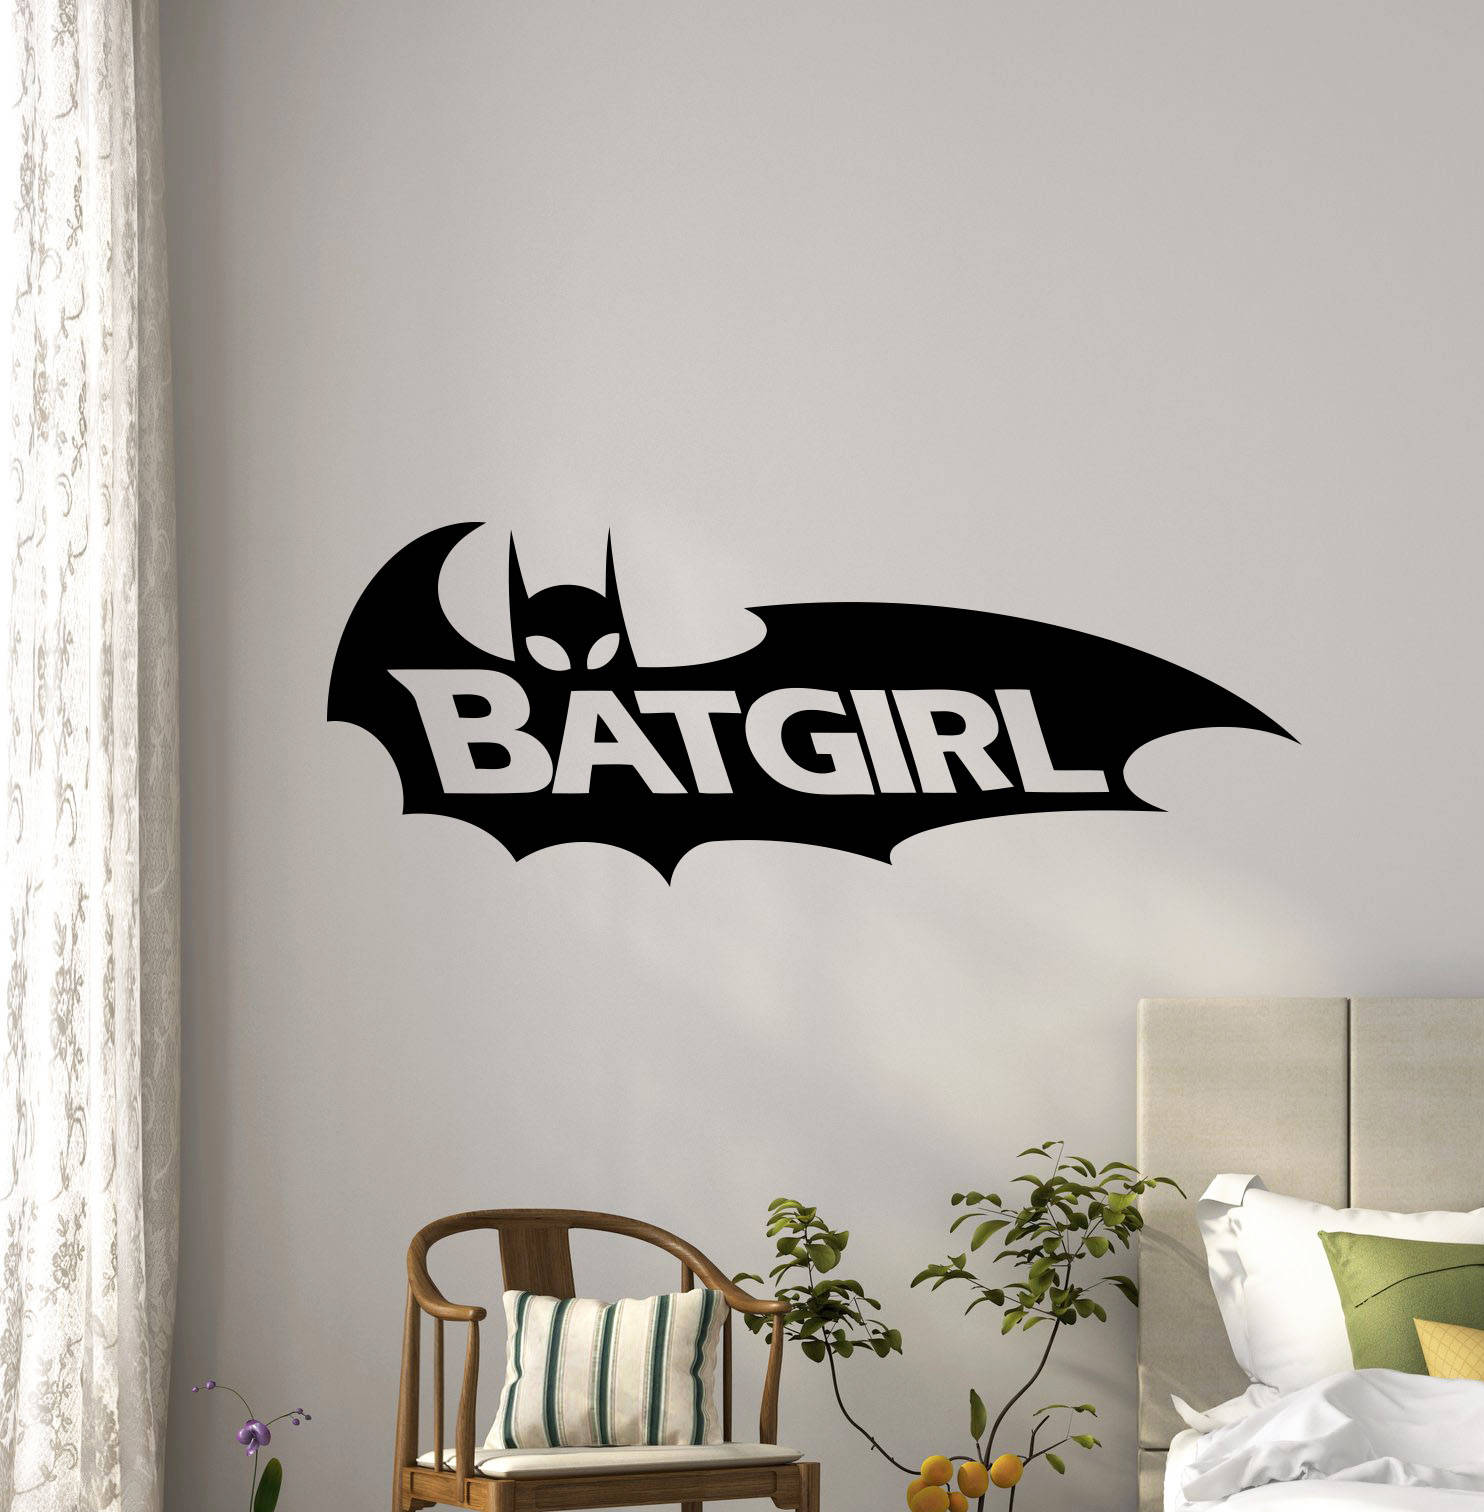 Batgirl Wall Decal Superhero Vinyl Sticker Bedroom Comic Book Decor Kids Gift Girl Room Baby Playroom Mural Art Stencil Nursery Poste Made In Us